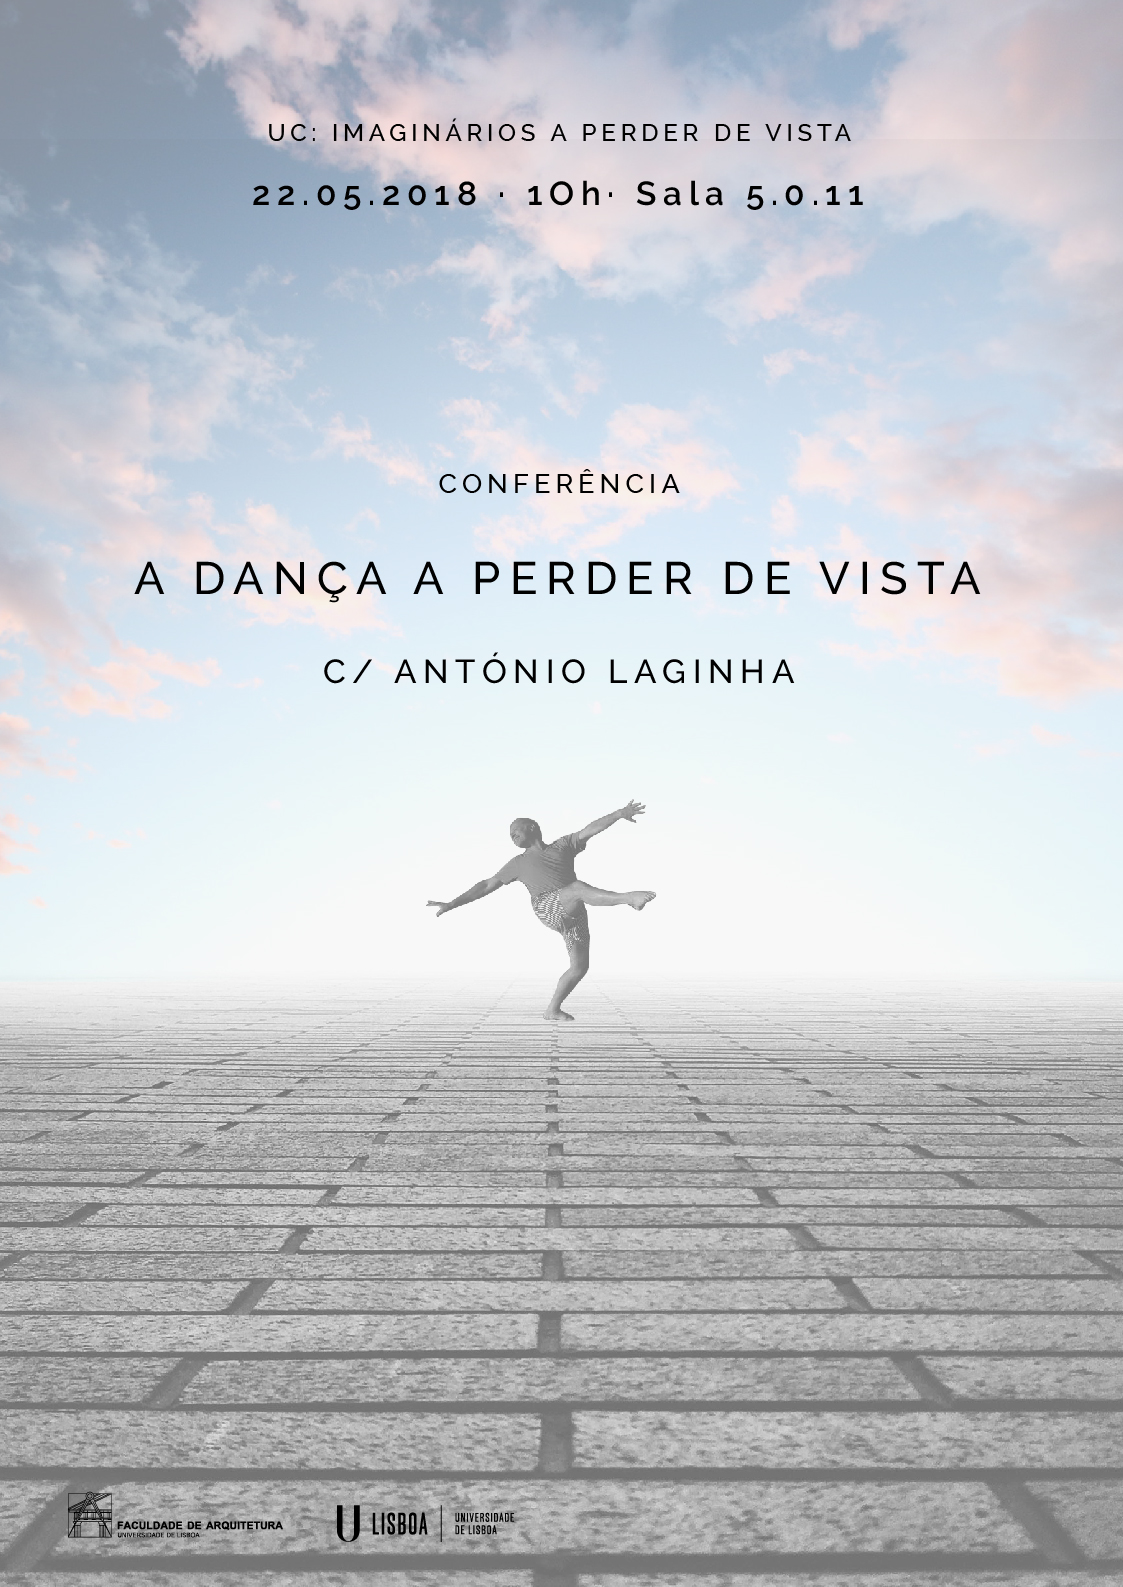 Conferência “A dança a perder de vista”